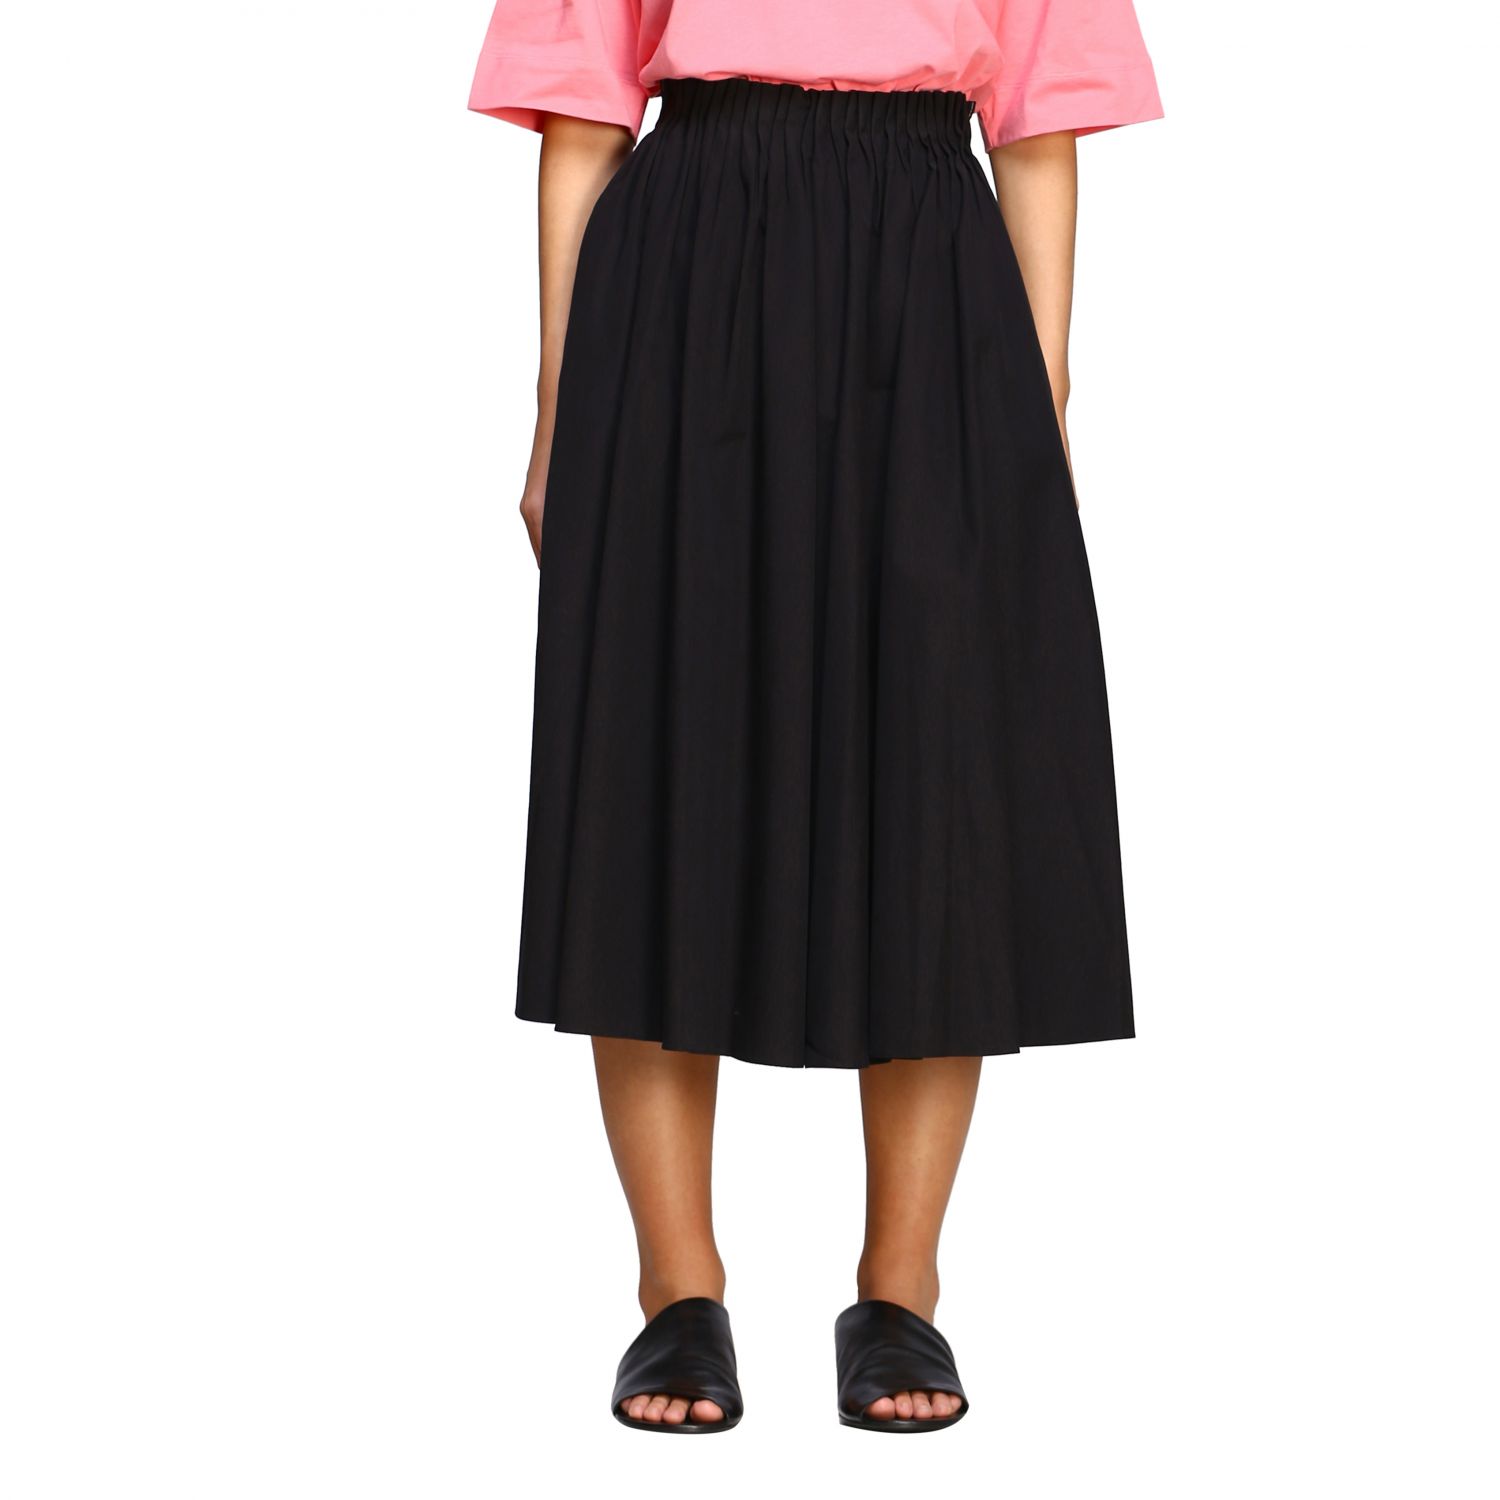 Marni Outlet: Wide midi skirt in cotton - Black | Marni skirt ...